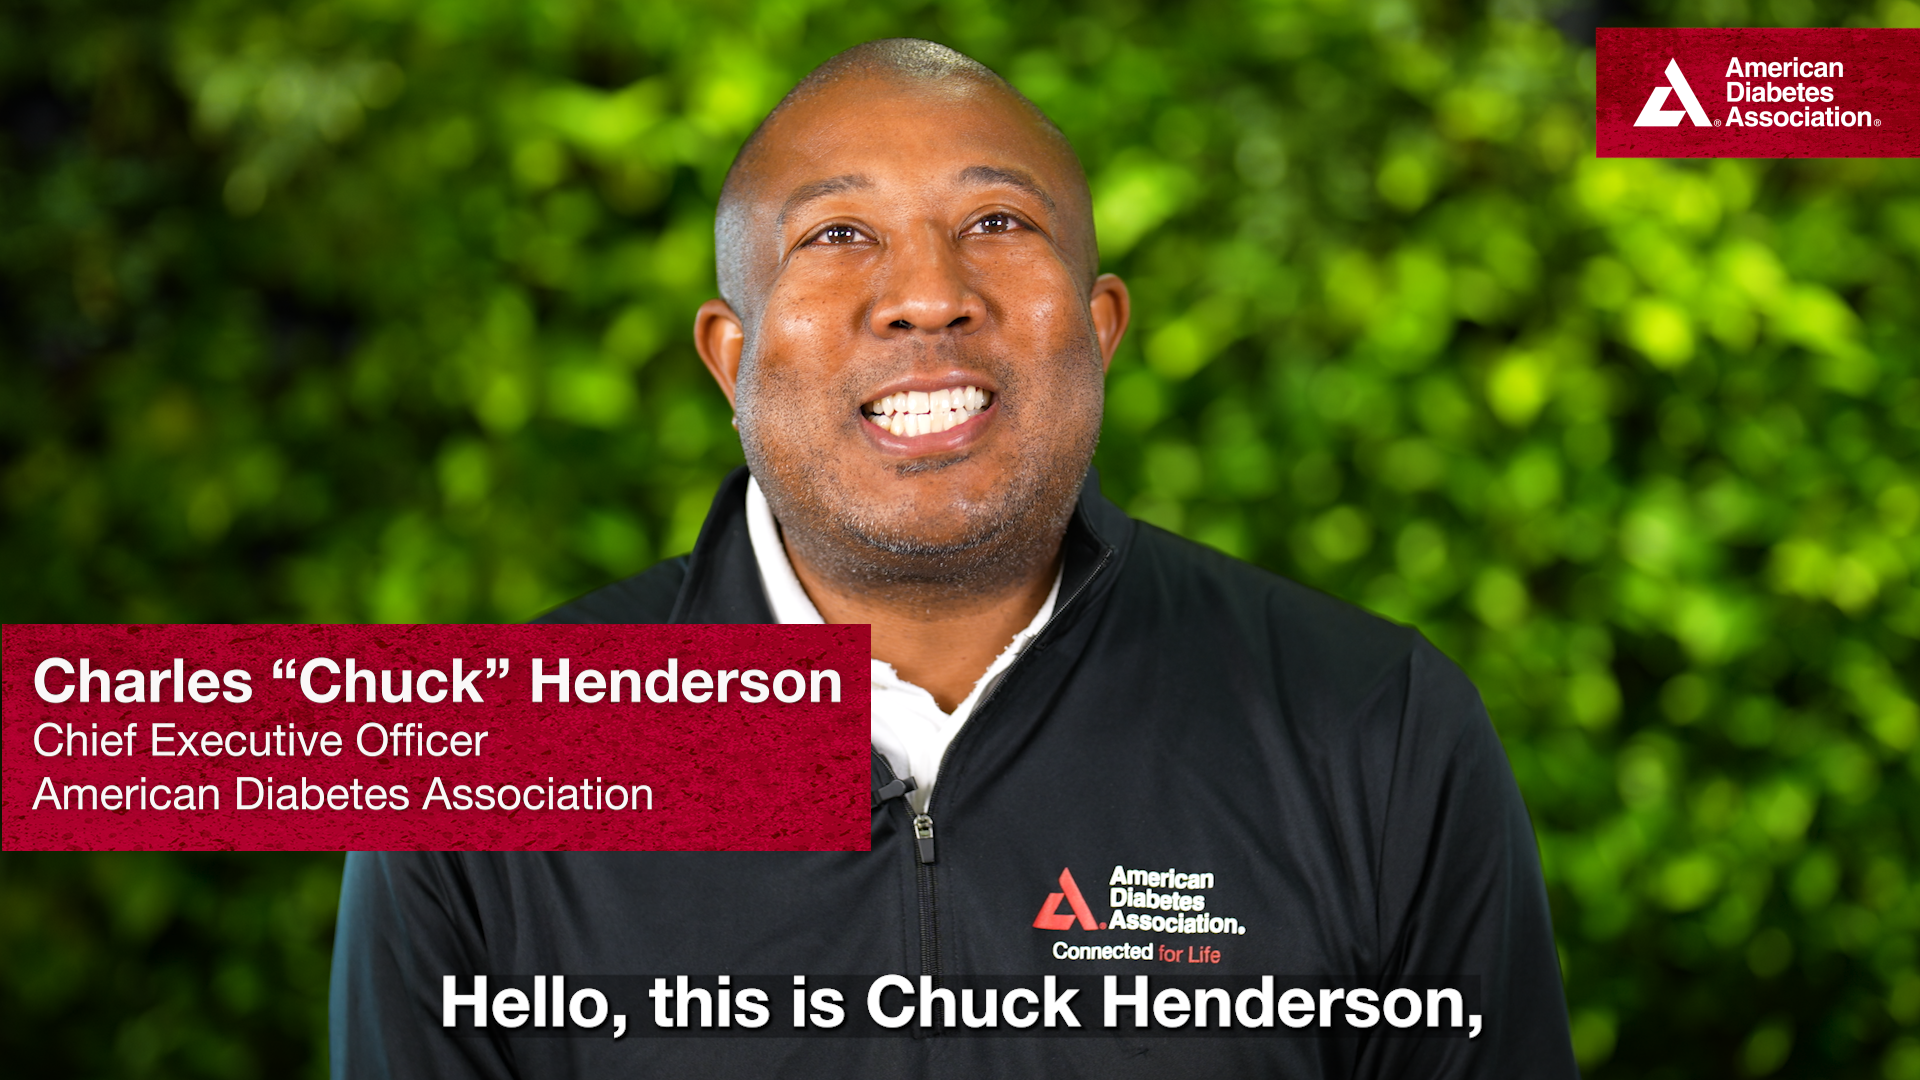 Video: Charles "Chuck" Henderson